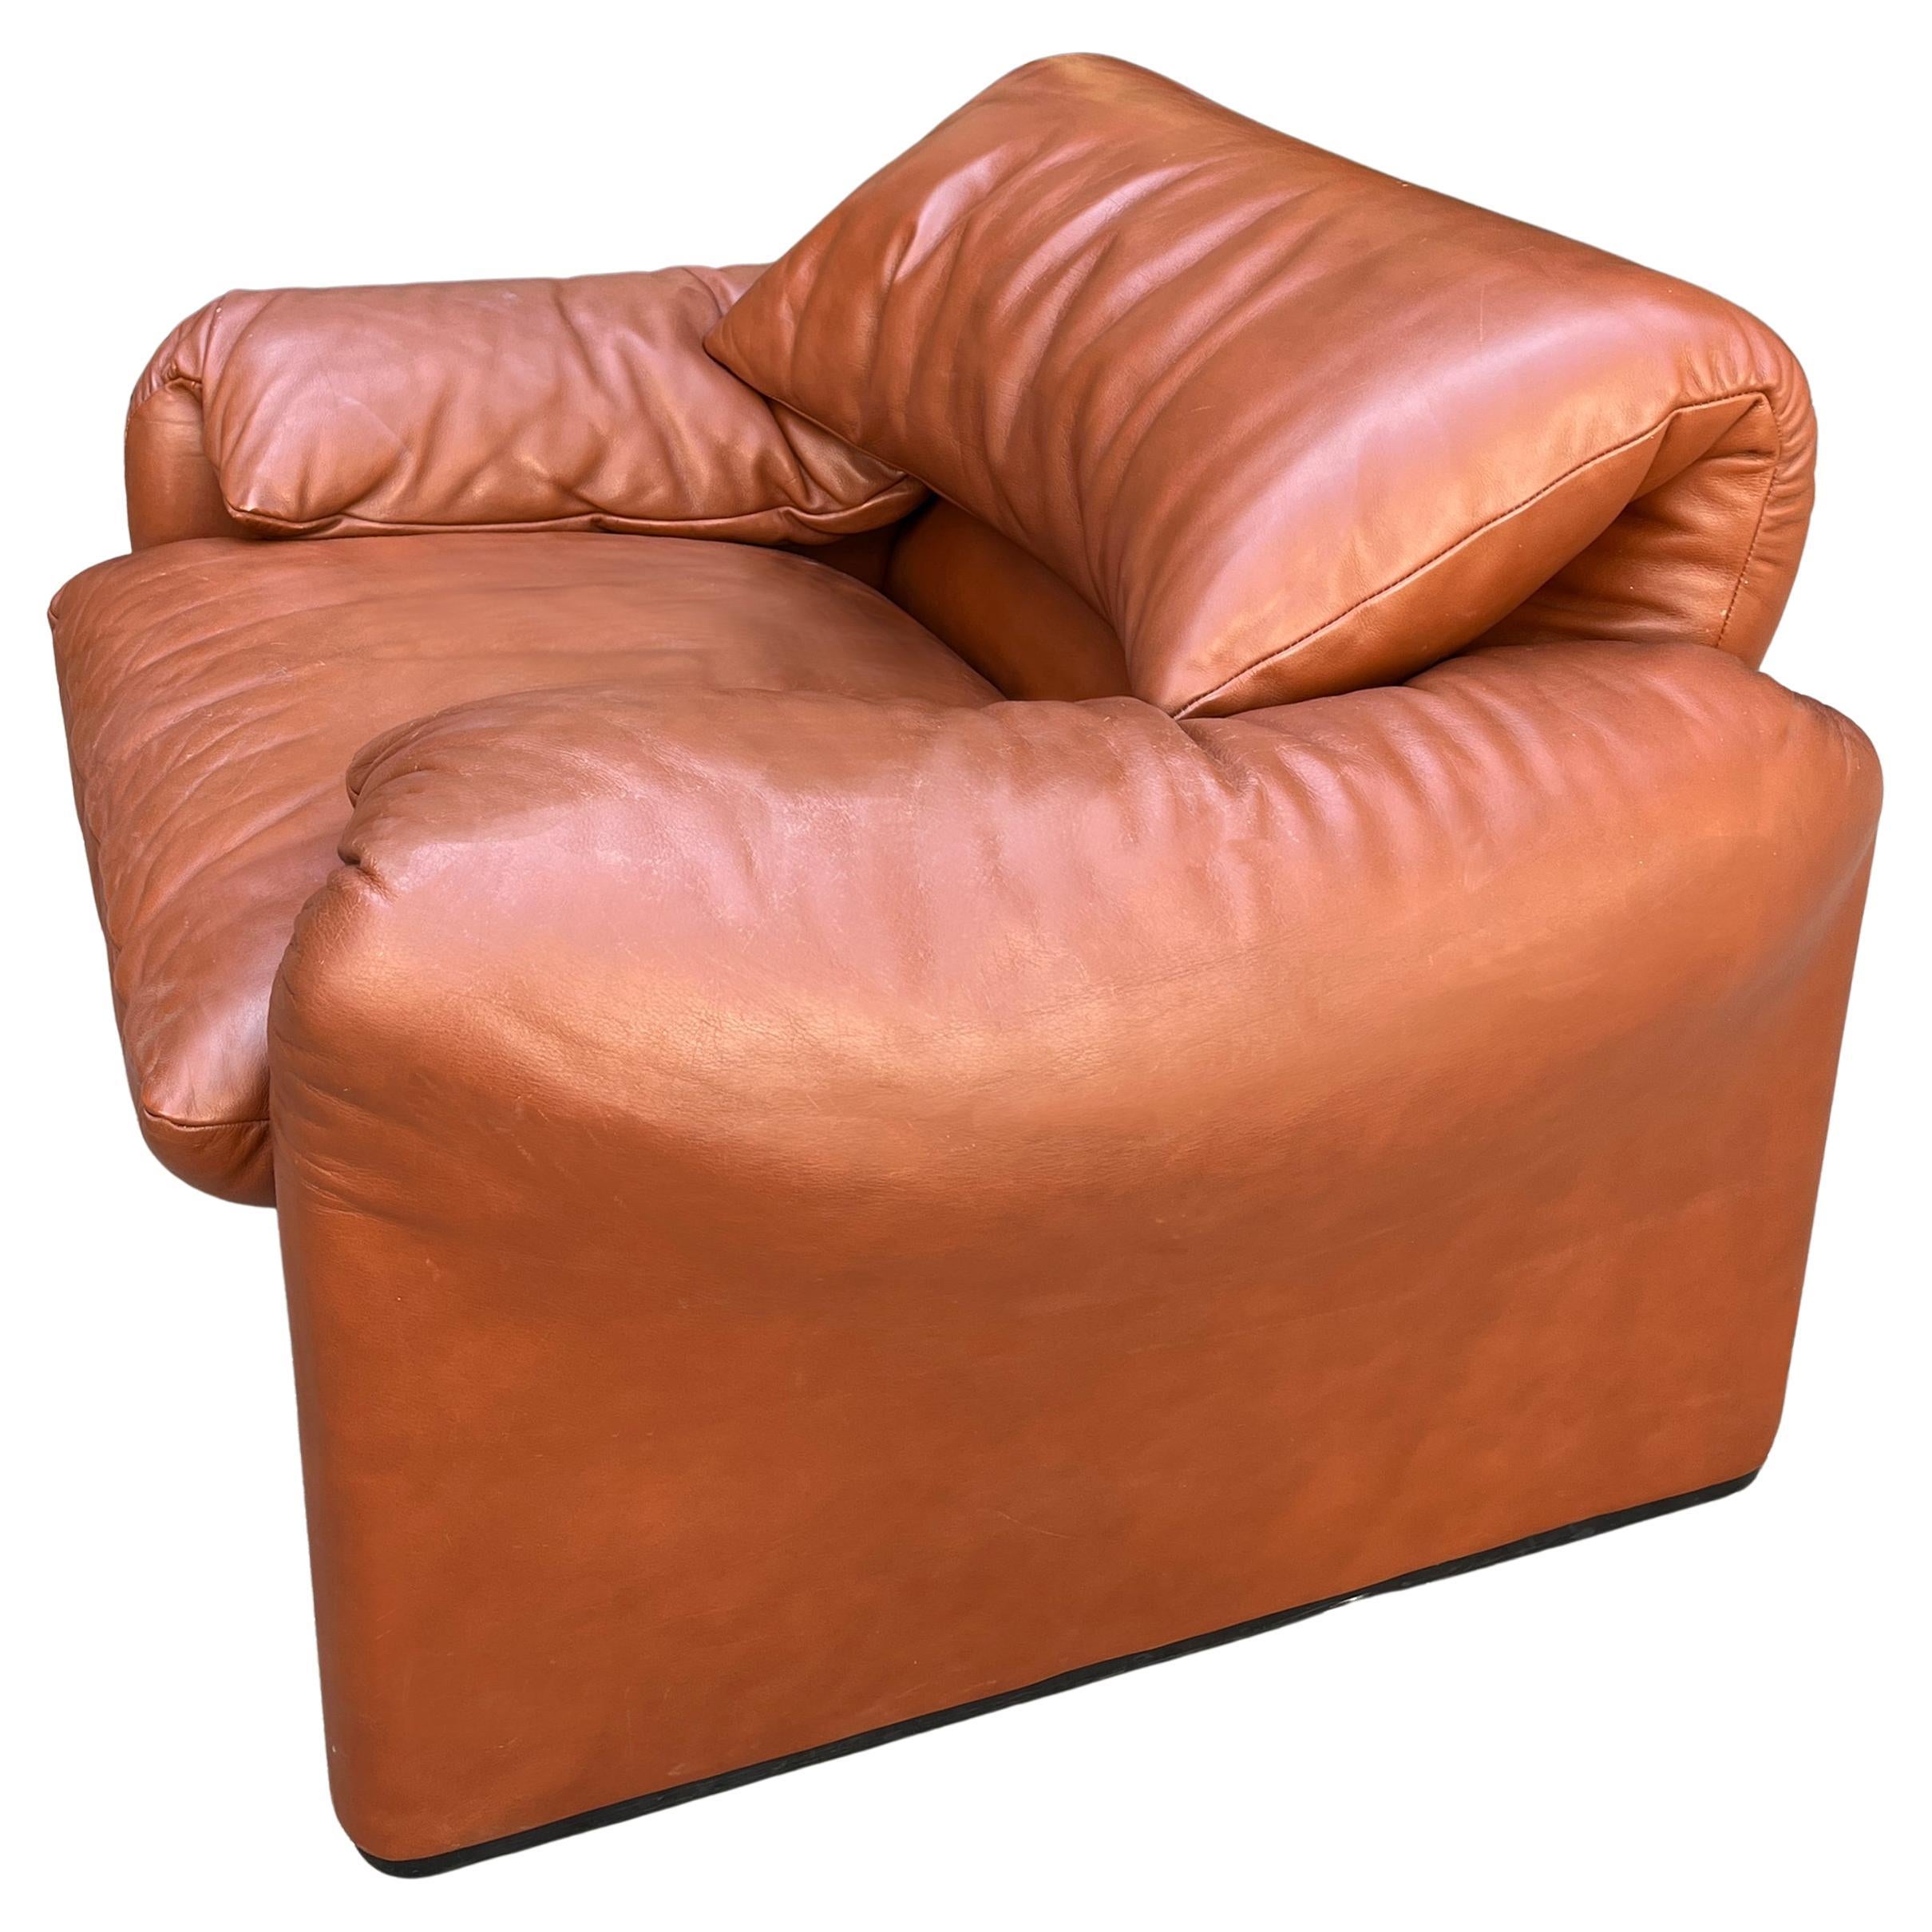 Leather Original Maralunga Lounge Chair for Cassina Designed by Vico Magistretti